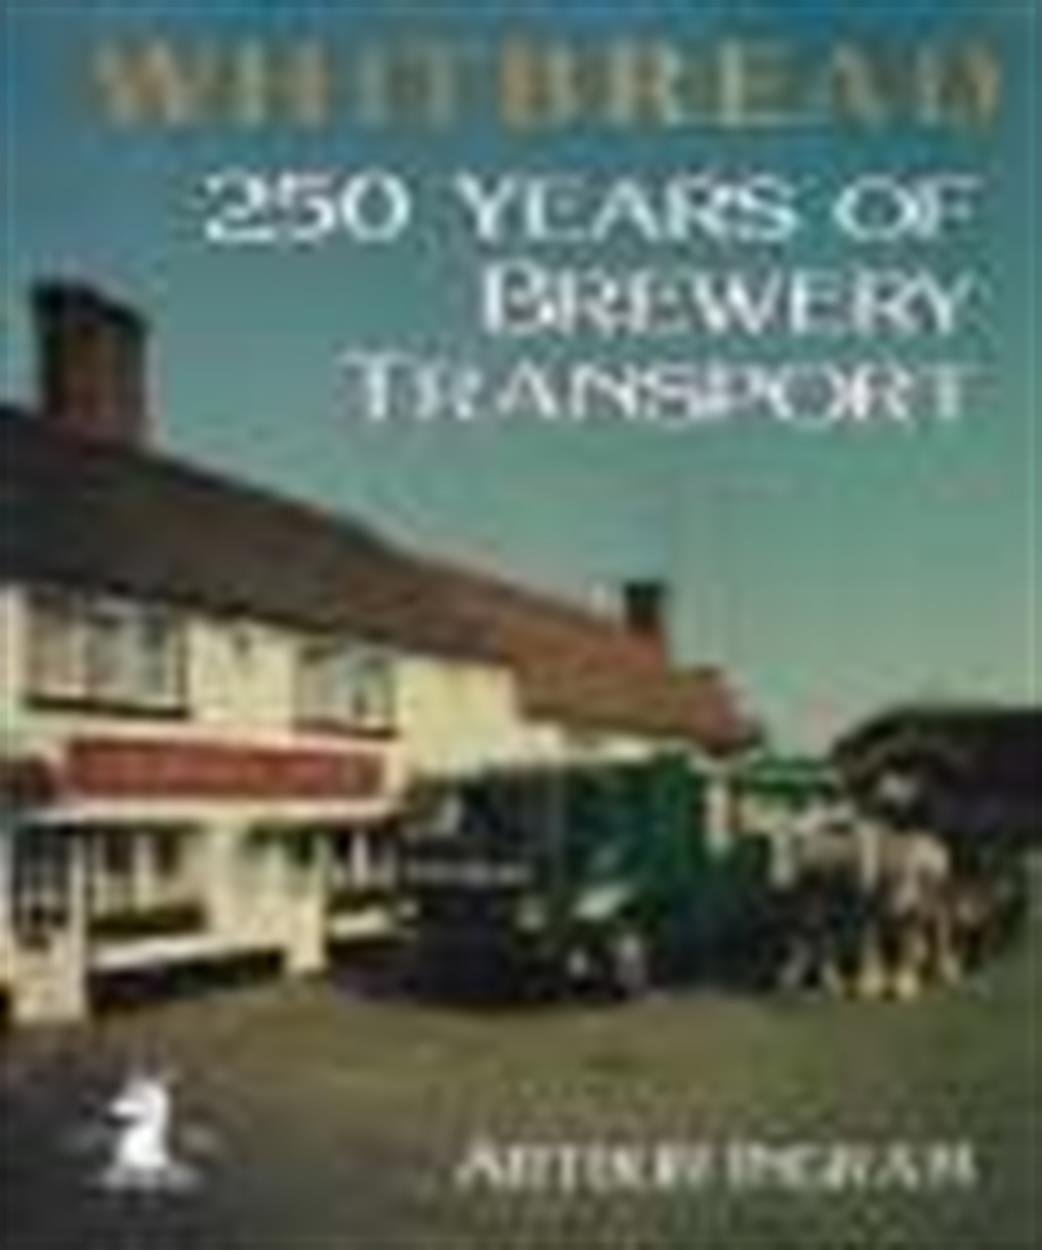 Roundoak Publishing  9781871565133 Whitbread 250 Years of Brewery Transport Book by Arthur Ingram